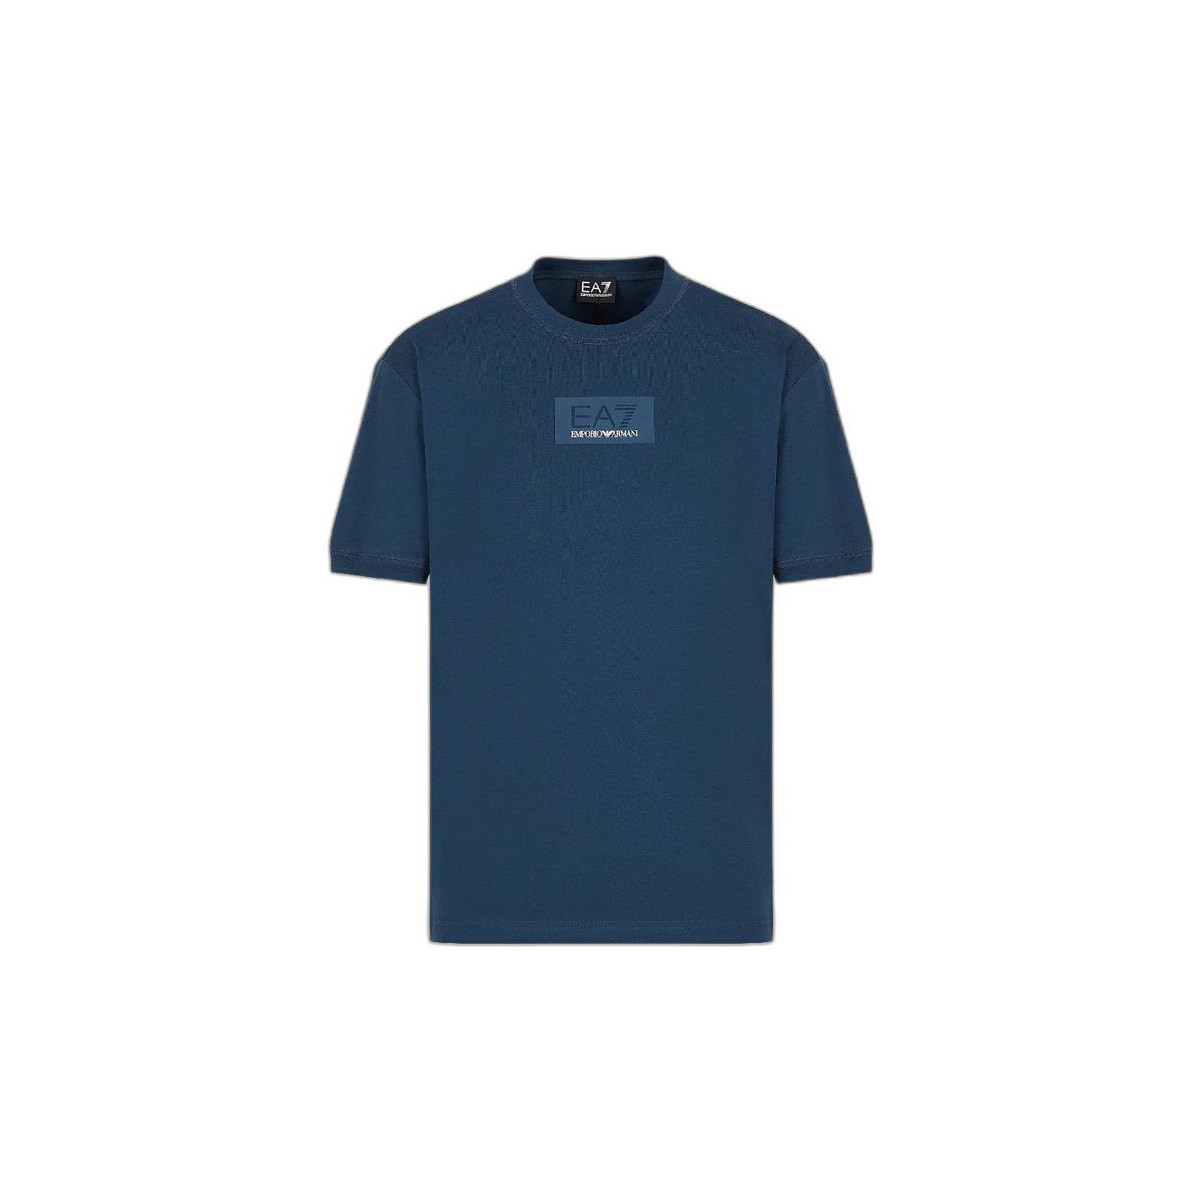 textil Hombre Camisetas manga corta Ea7 Emporio Armani T-shirt Azul